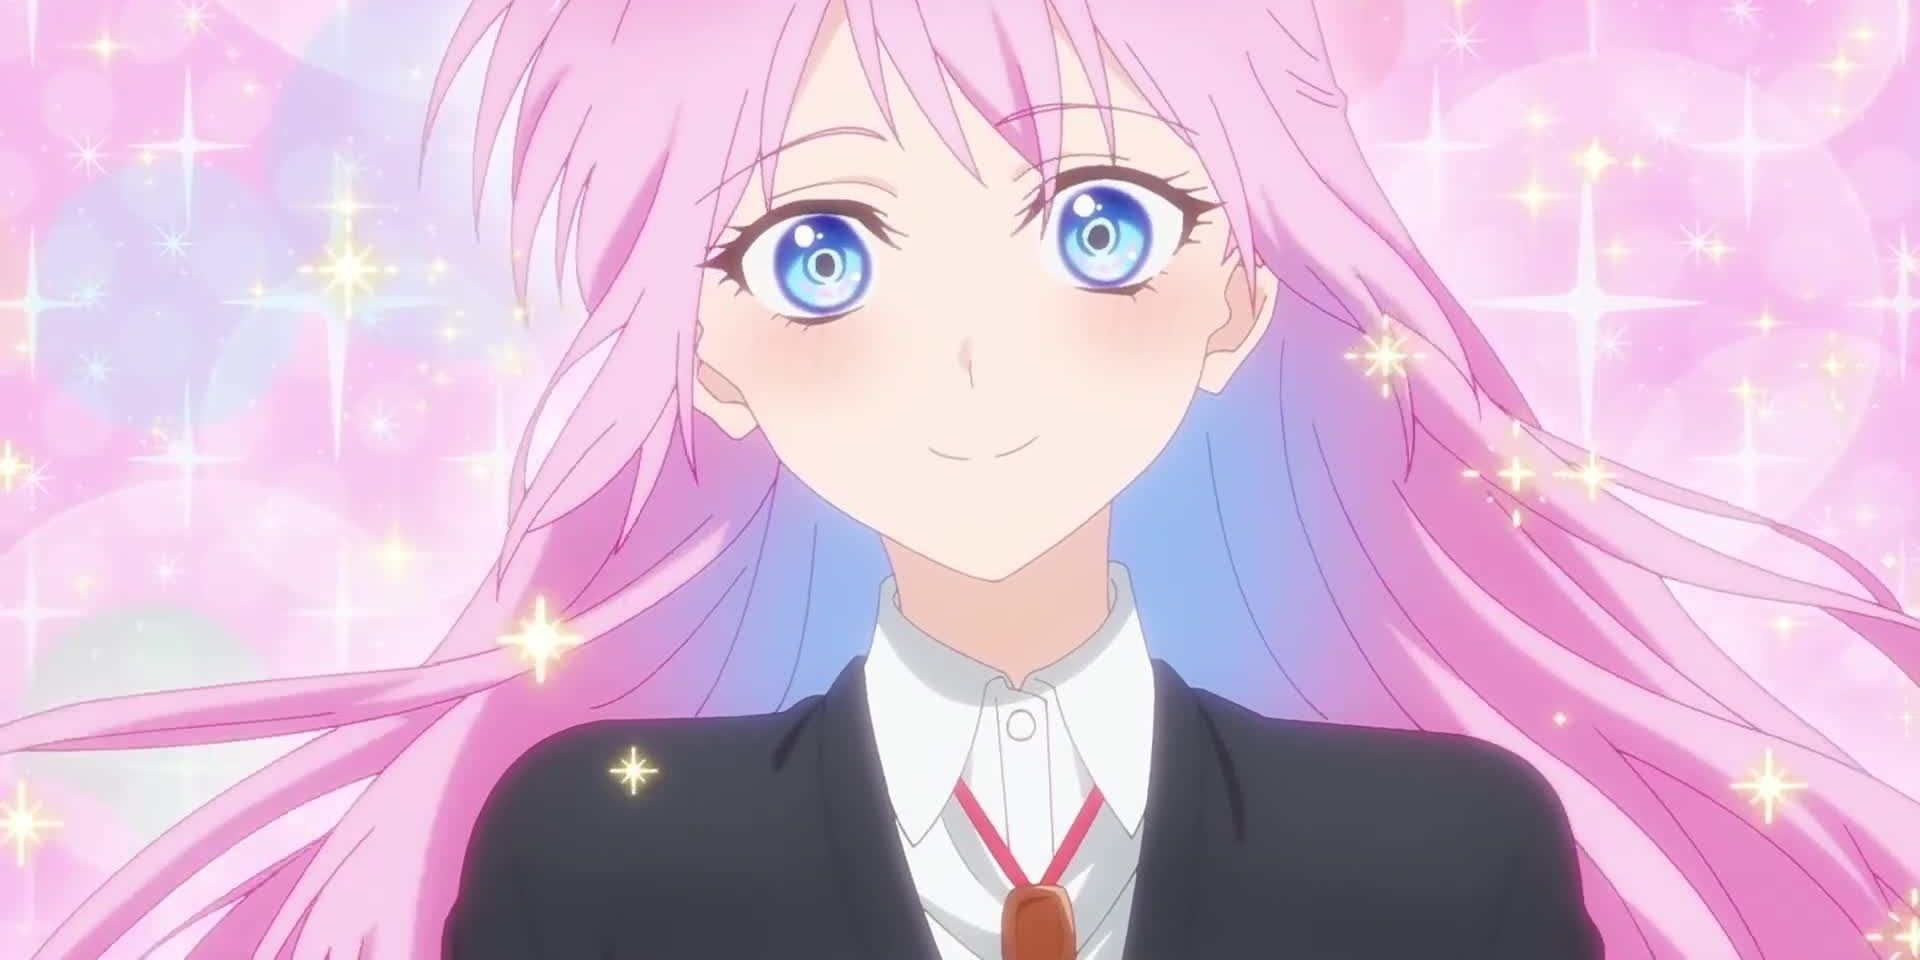 Shikimori smiling brightly Shikimori's Not Just a Cutie